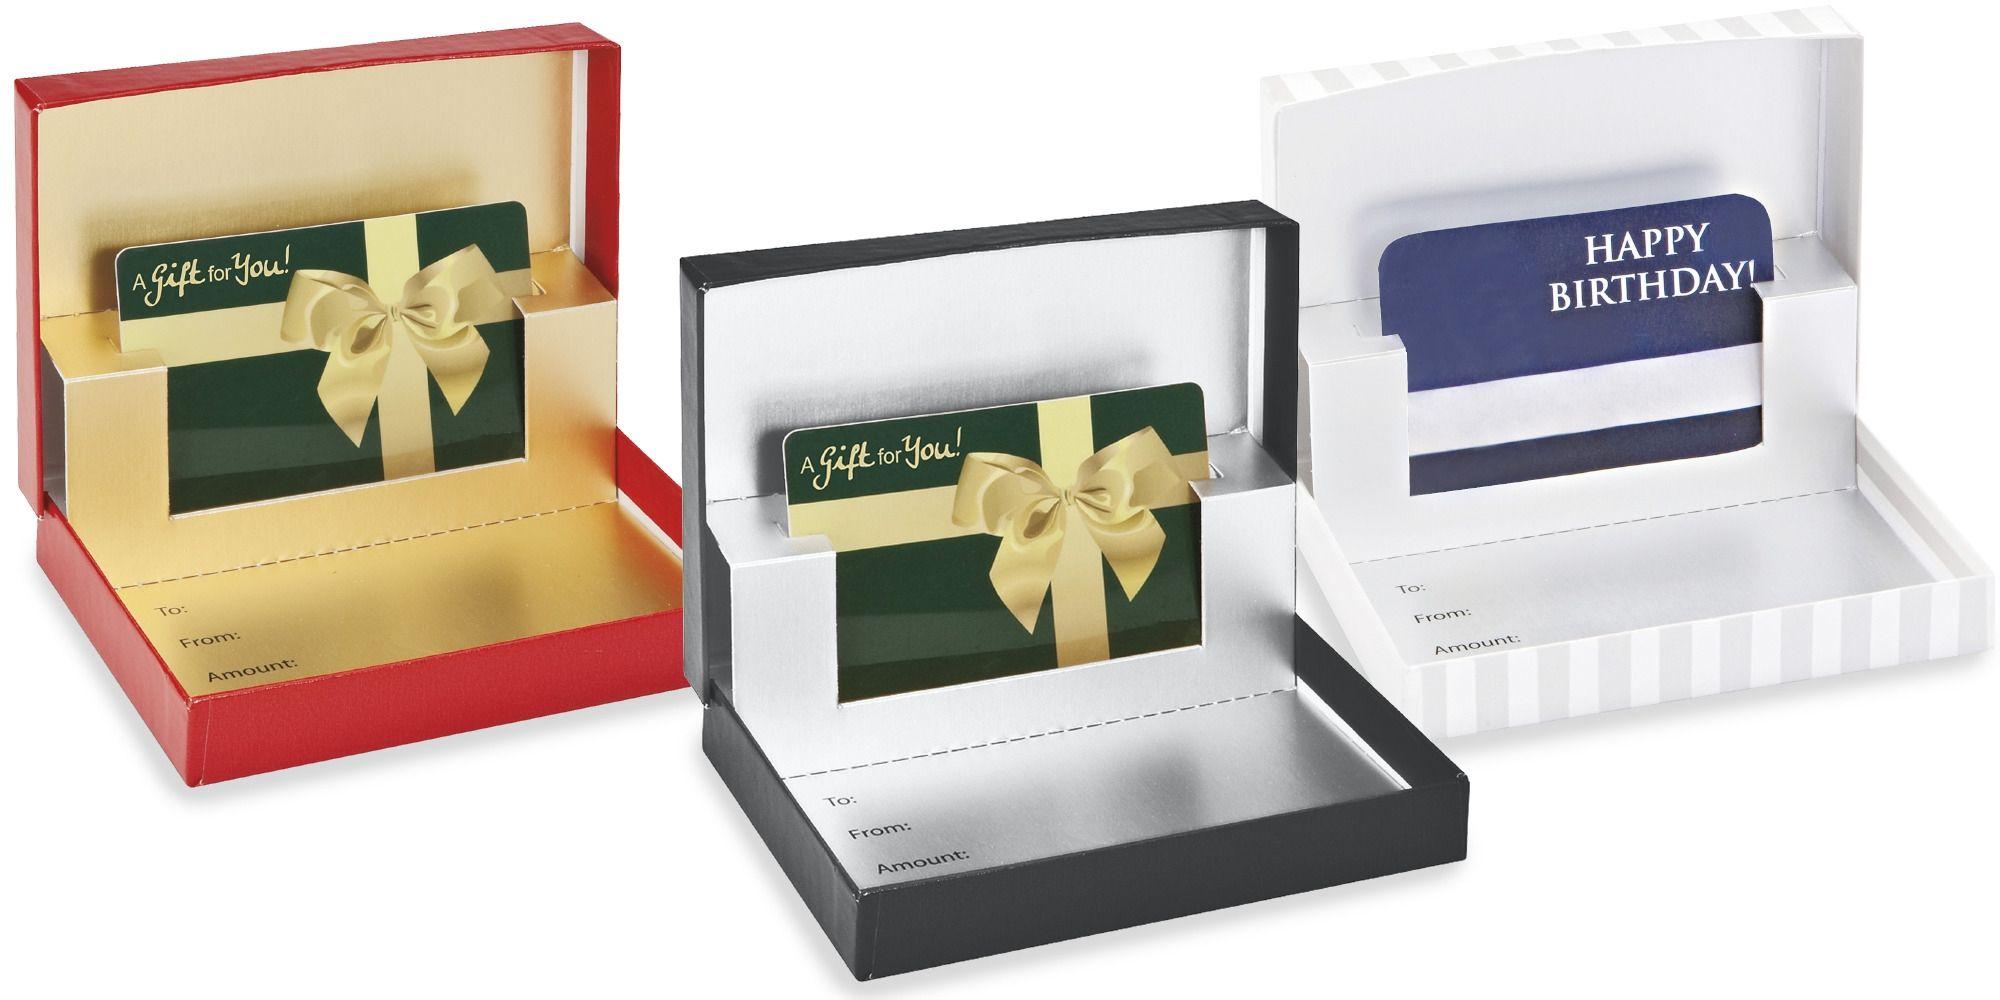 Custom Printed Gift Card Boxes https://www.plusprinters.com/